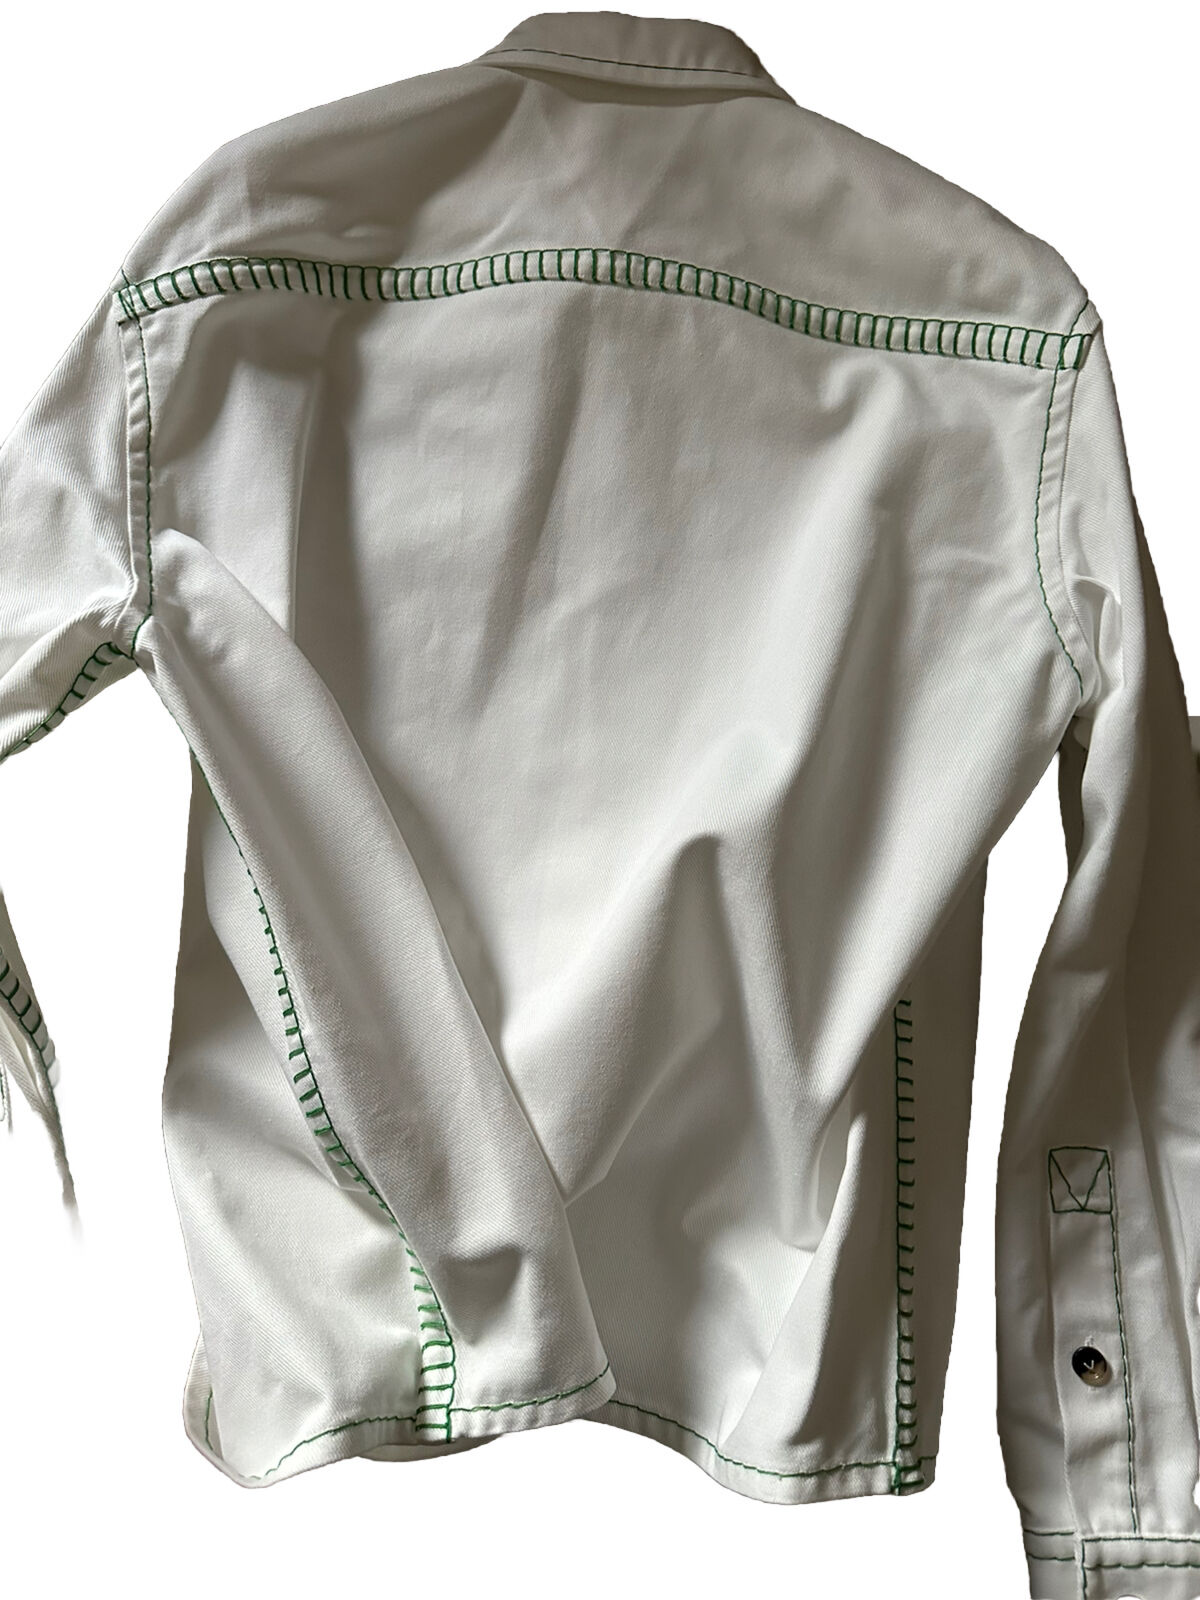 Neu mit Etikett: 1200 $ Bottega Veneta Herren-Oversize-Hemd aus schwerem Baumwoll-Twill, Weiß, 46 Eu/S